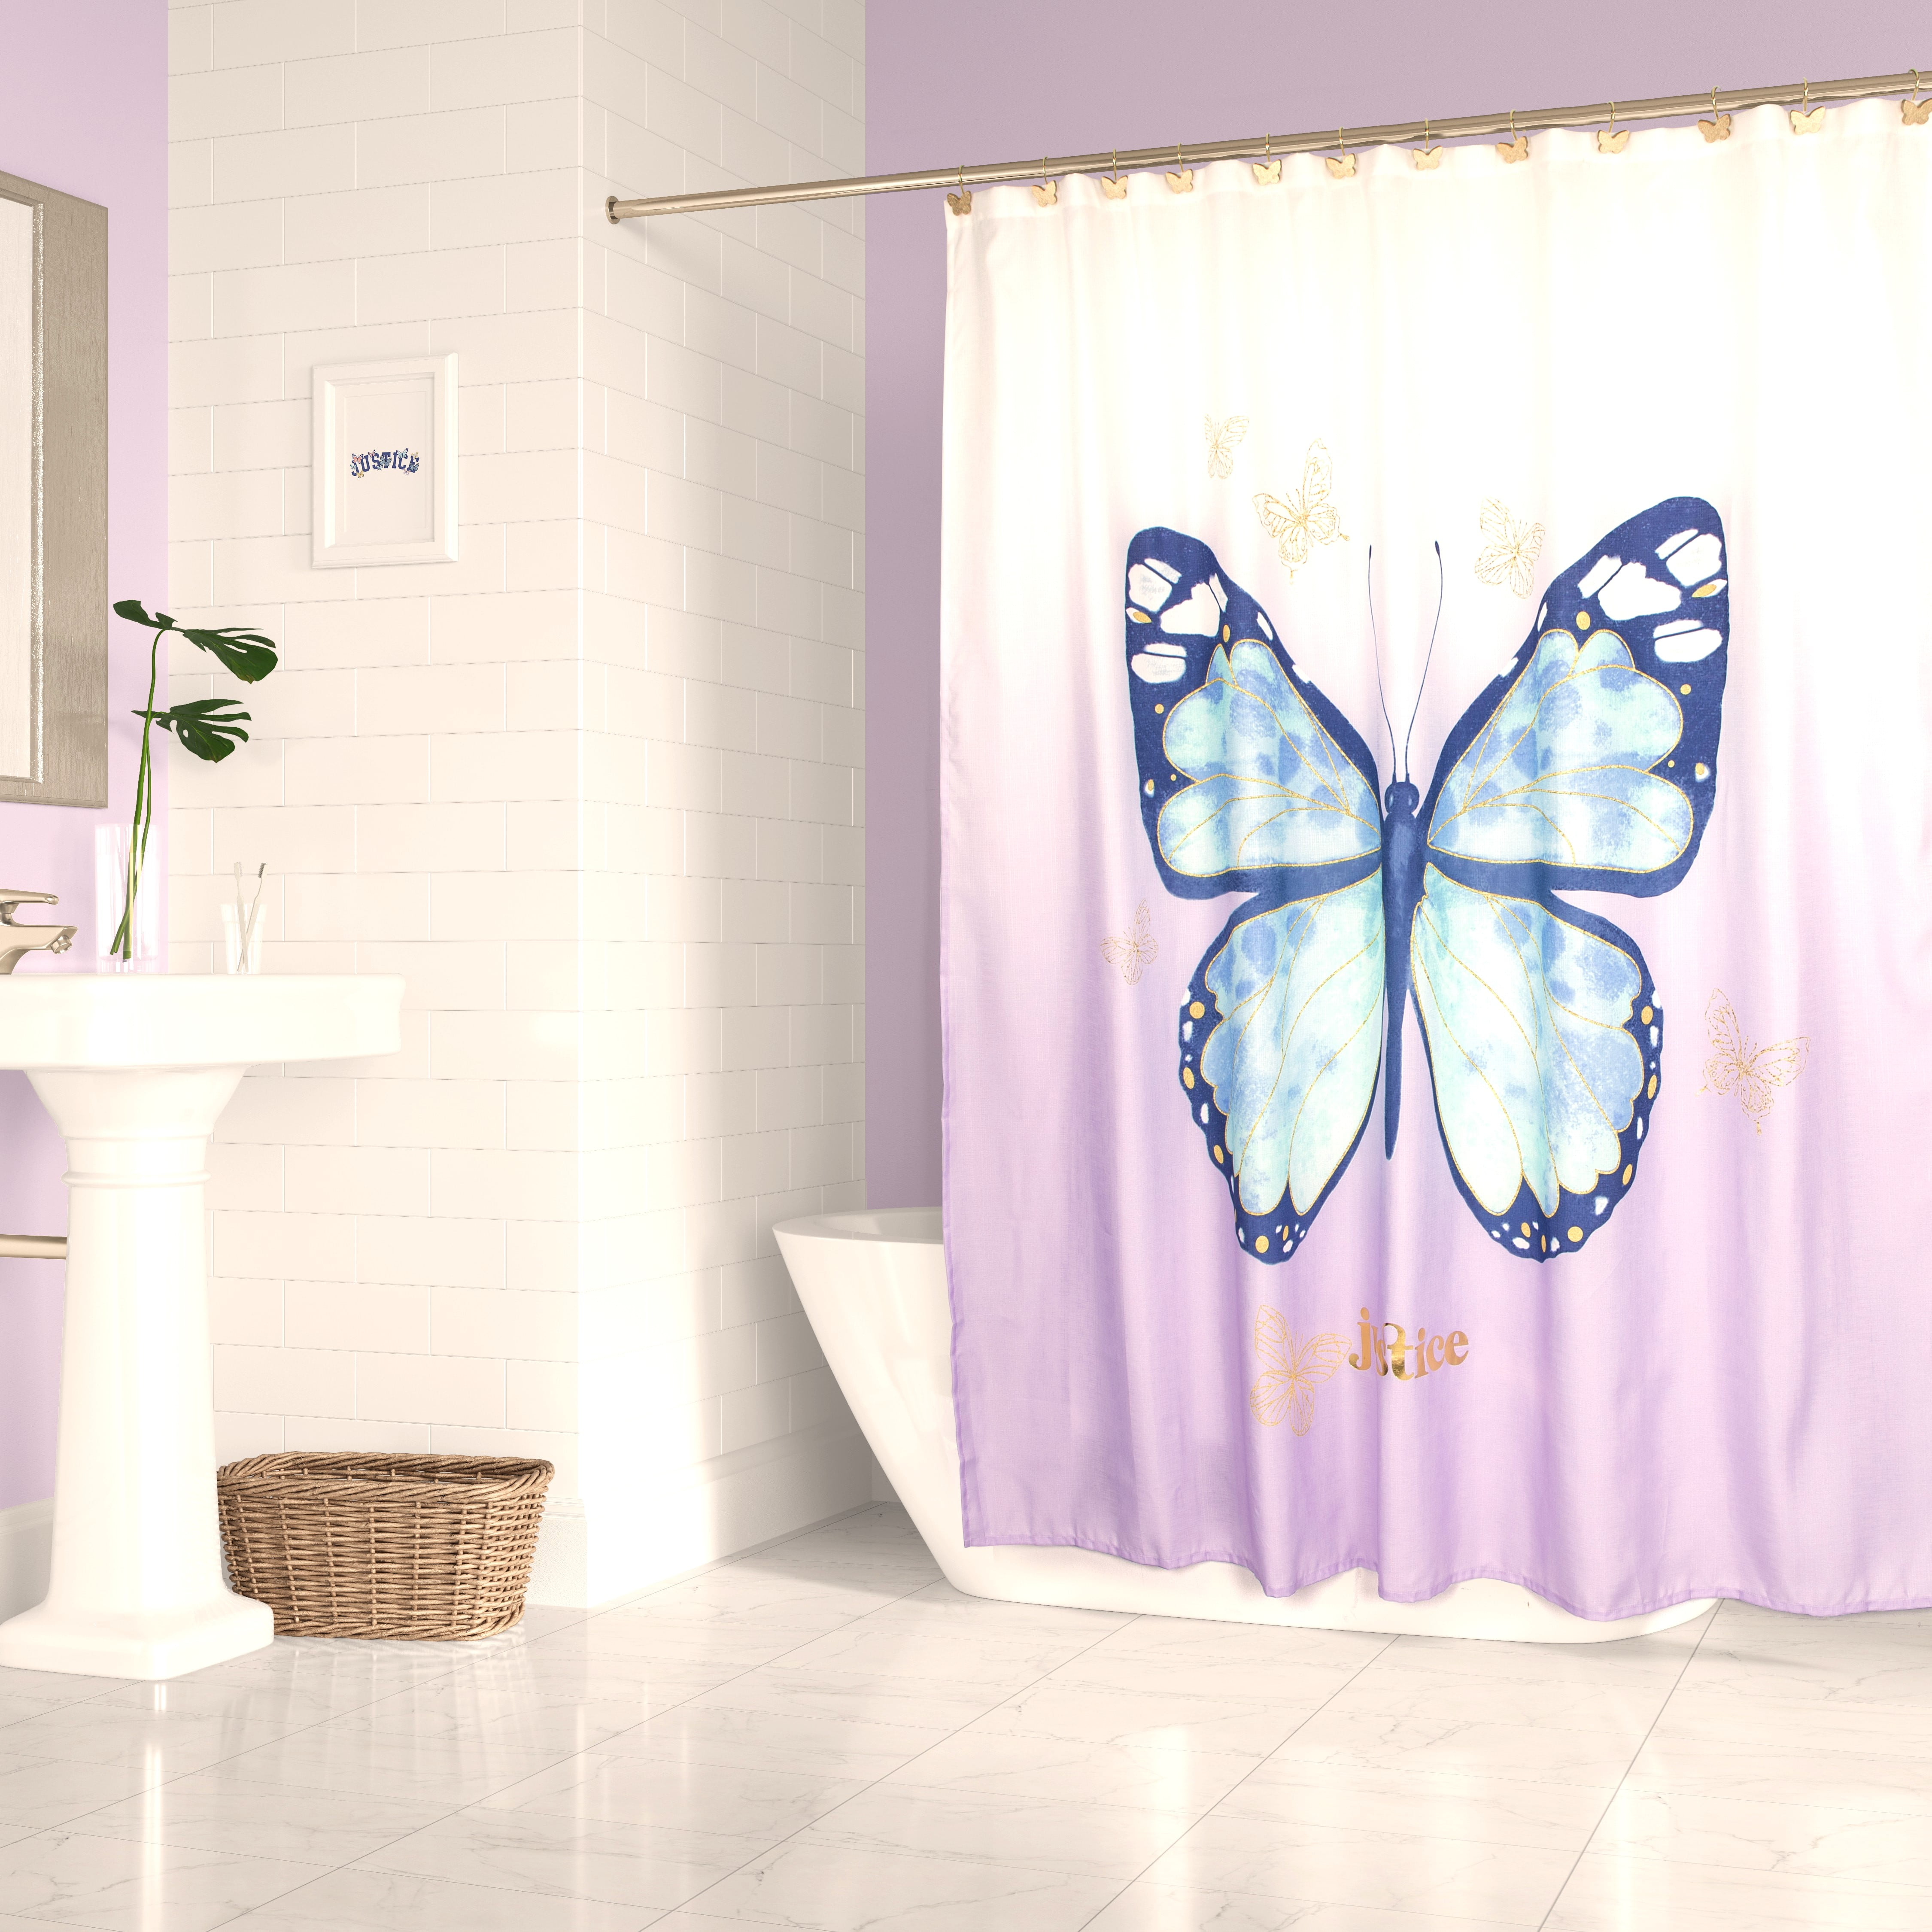 Cartoon Animal Child Room Bathroom Set Decor Polyester Shower Curtain Hooks 